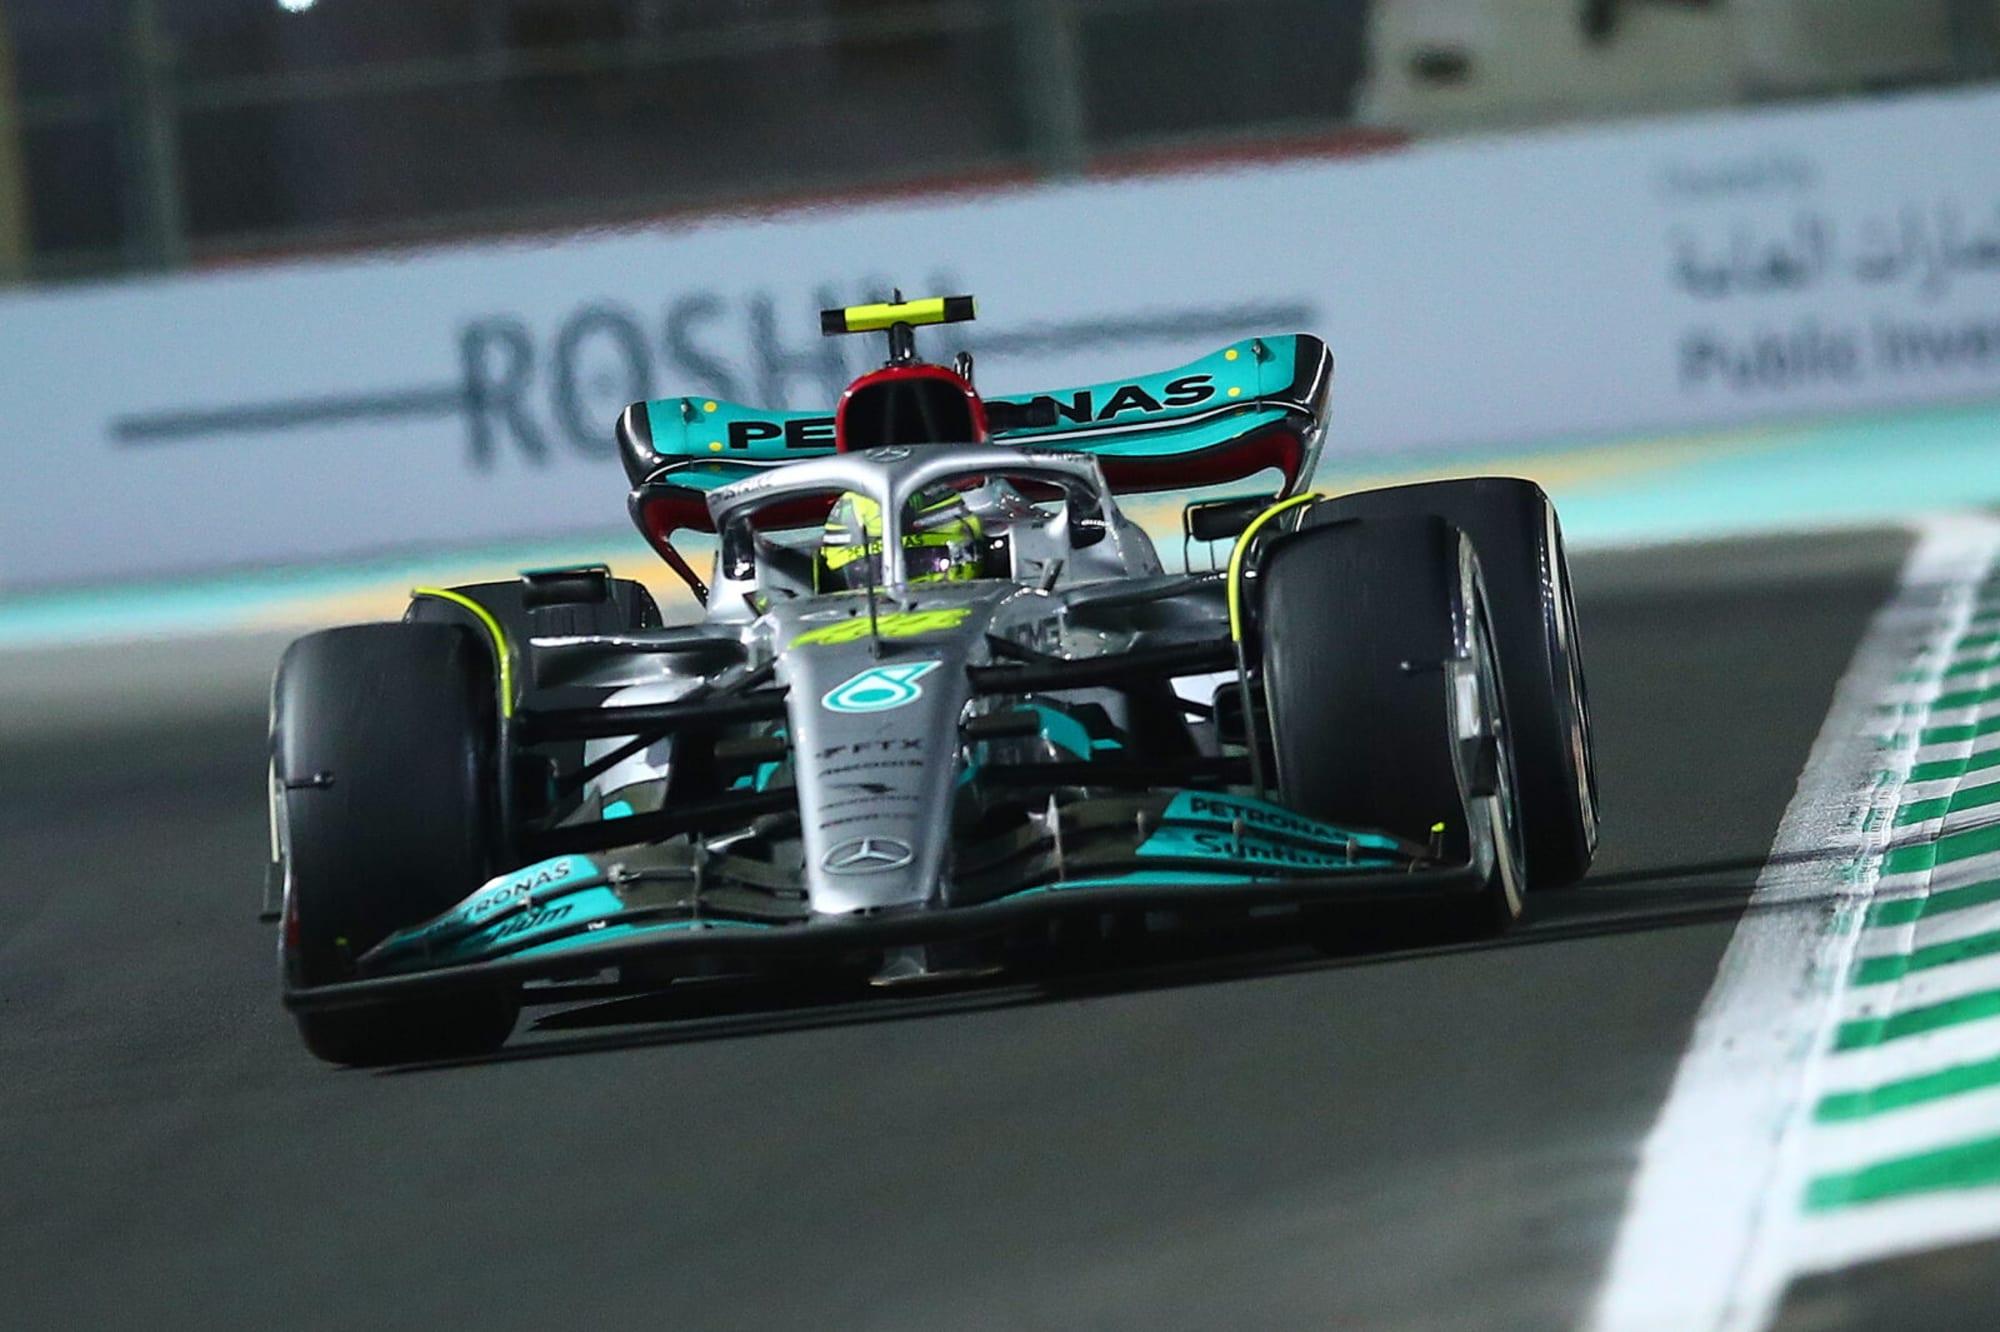 Formula Lewis Hamilton Record At Risk After Slow Start